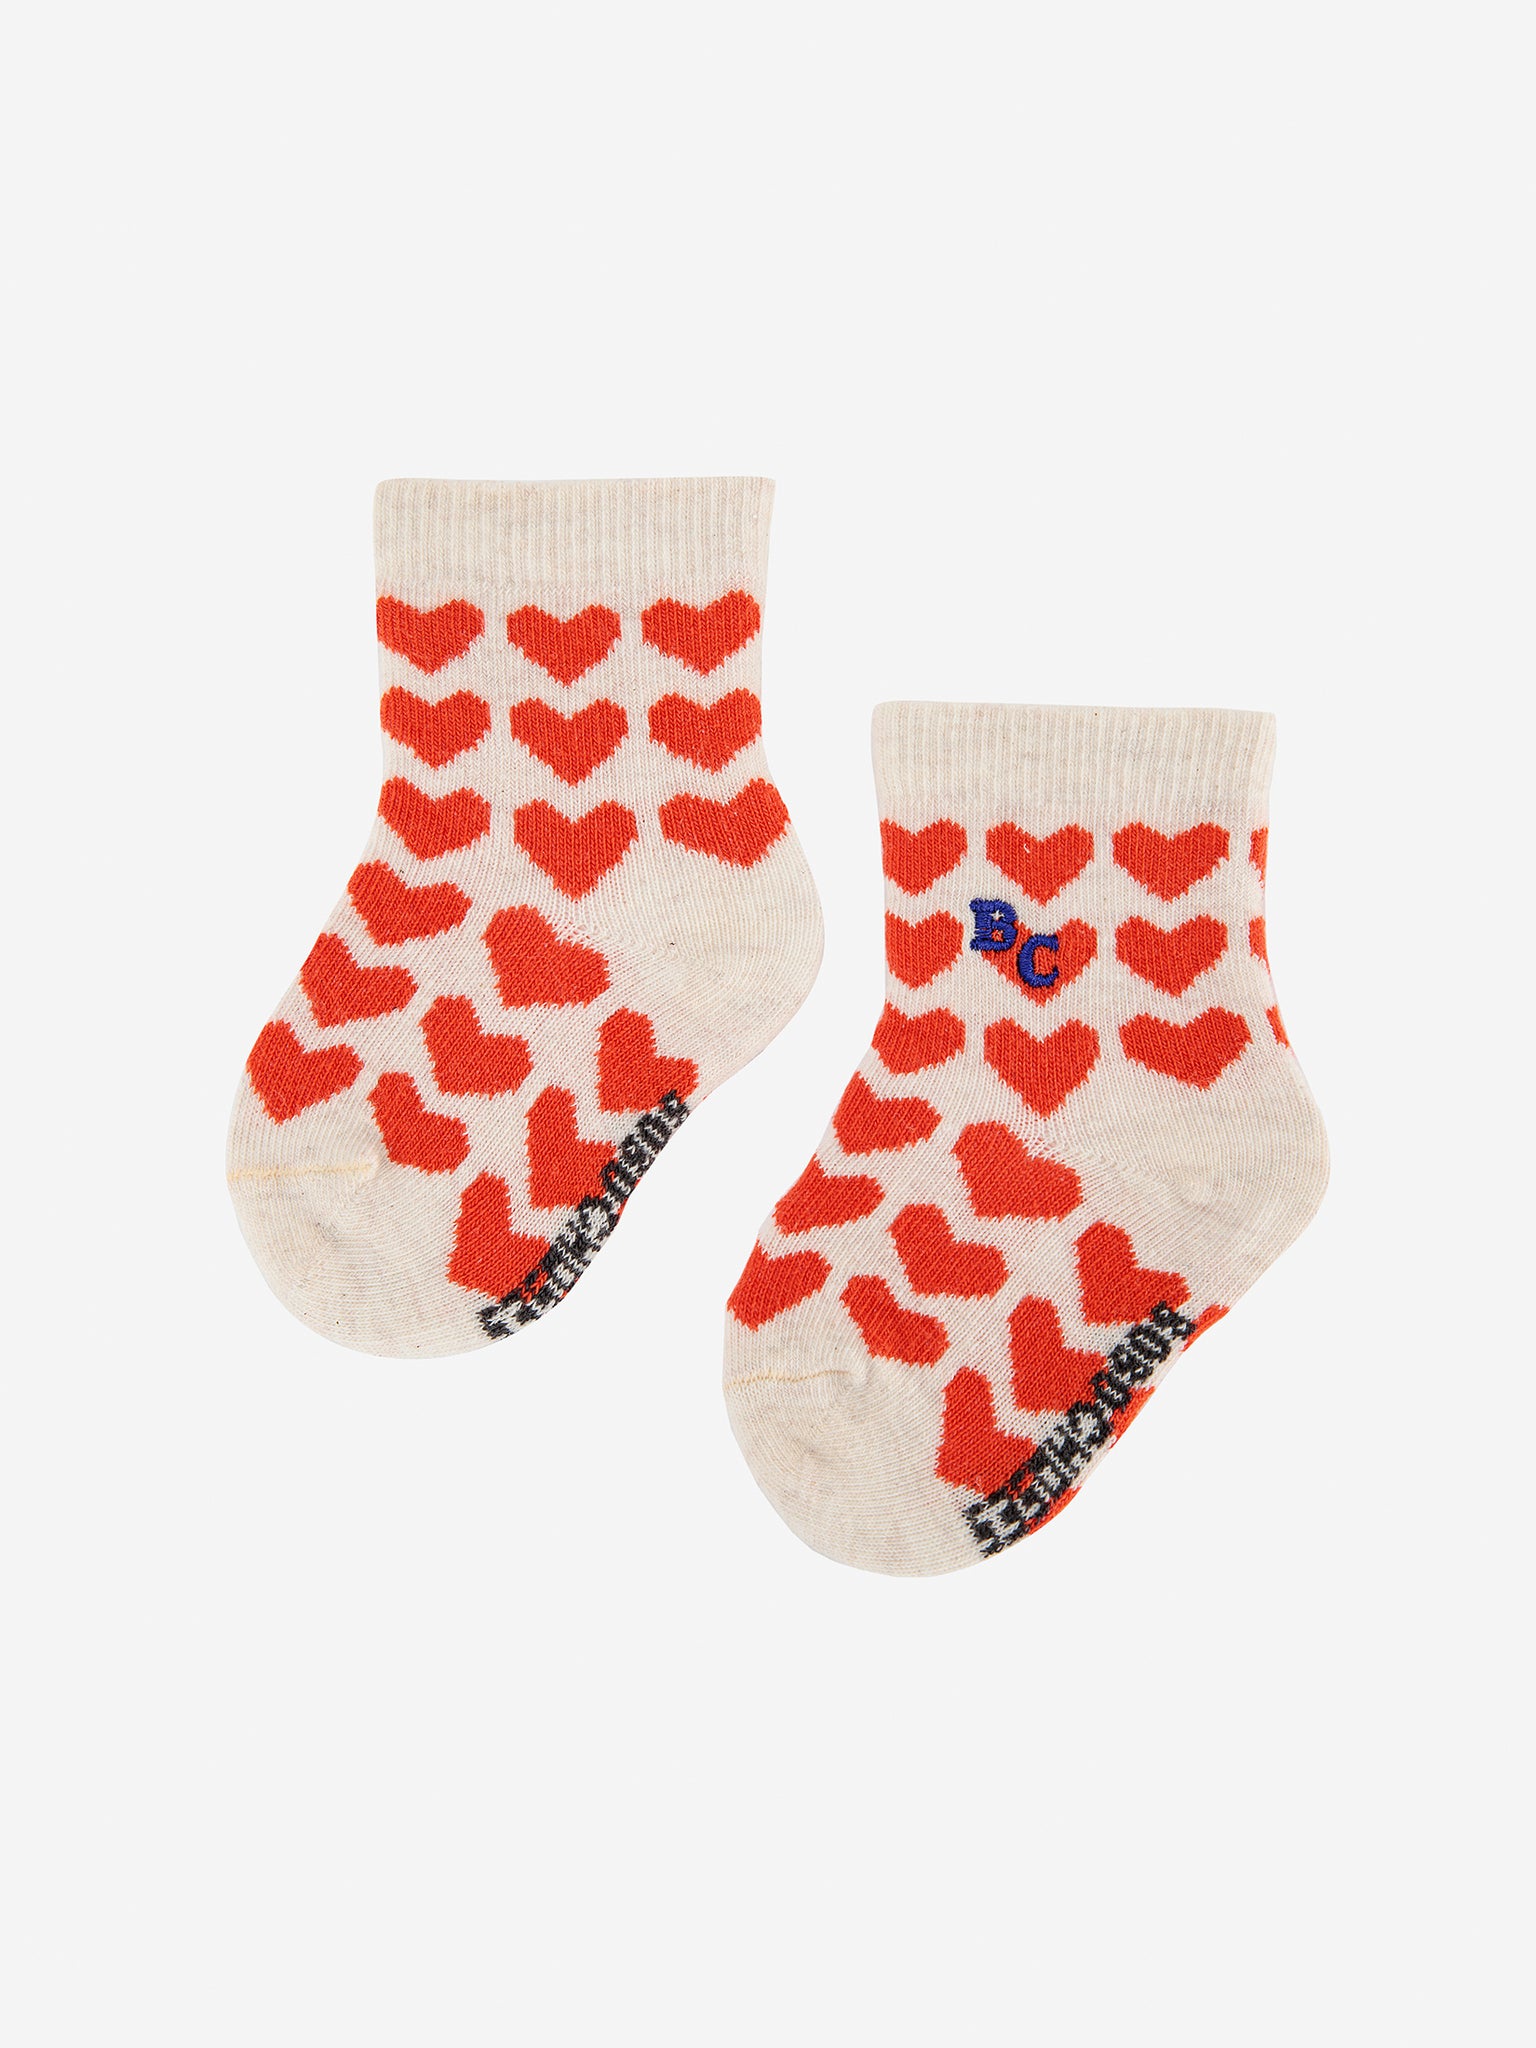 Hearts all over baby socks